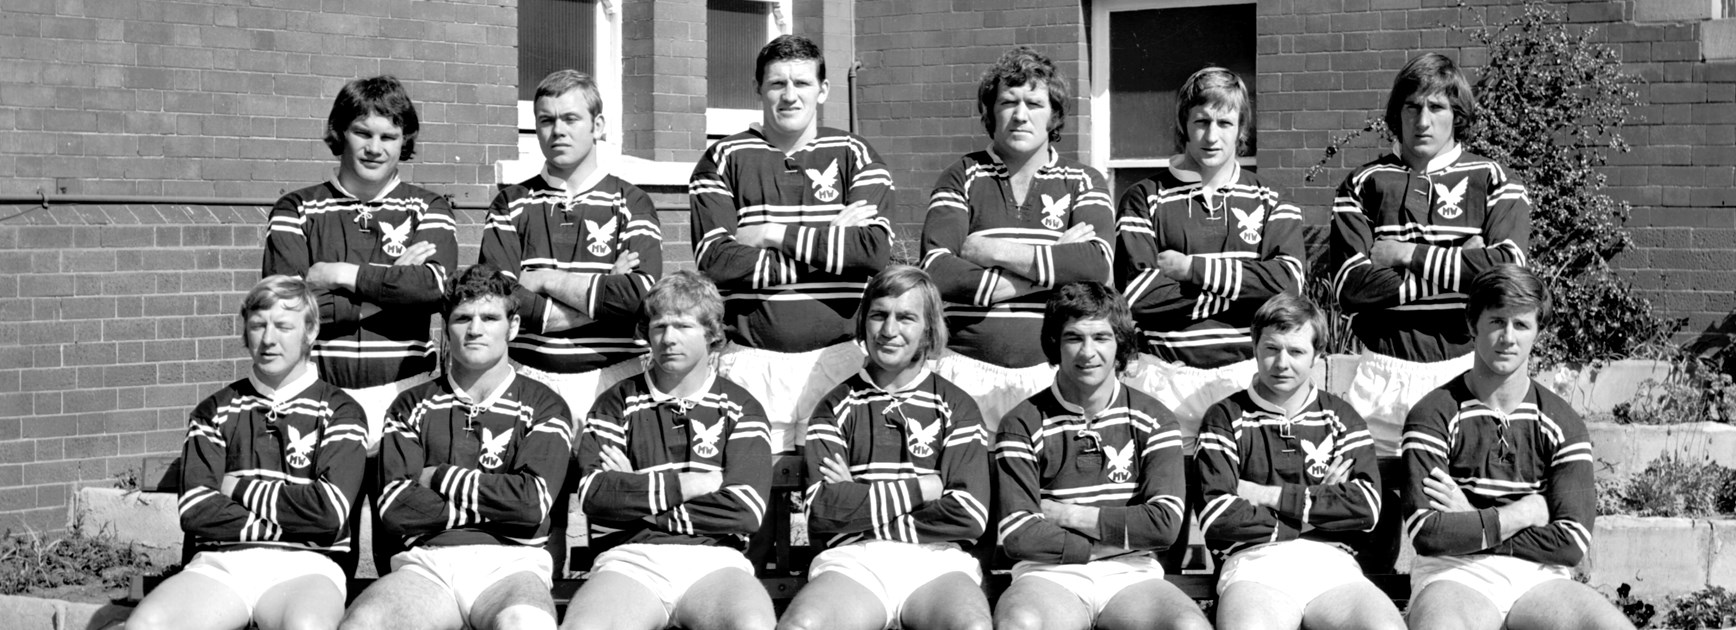 Grand Final Flashback: Sea Eagles 1972 Premiership